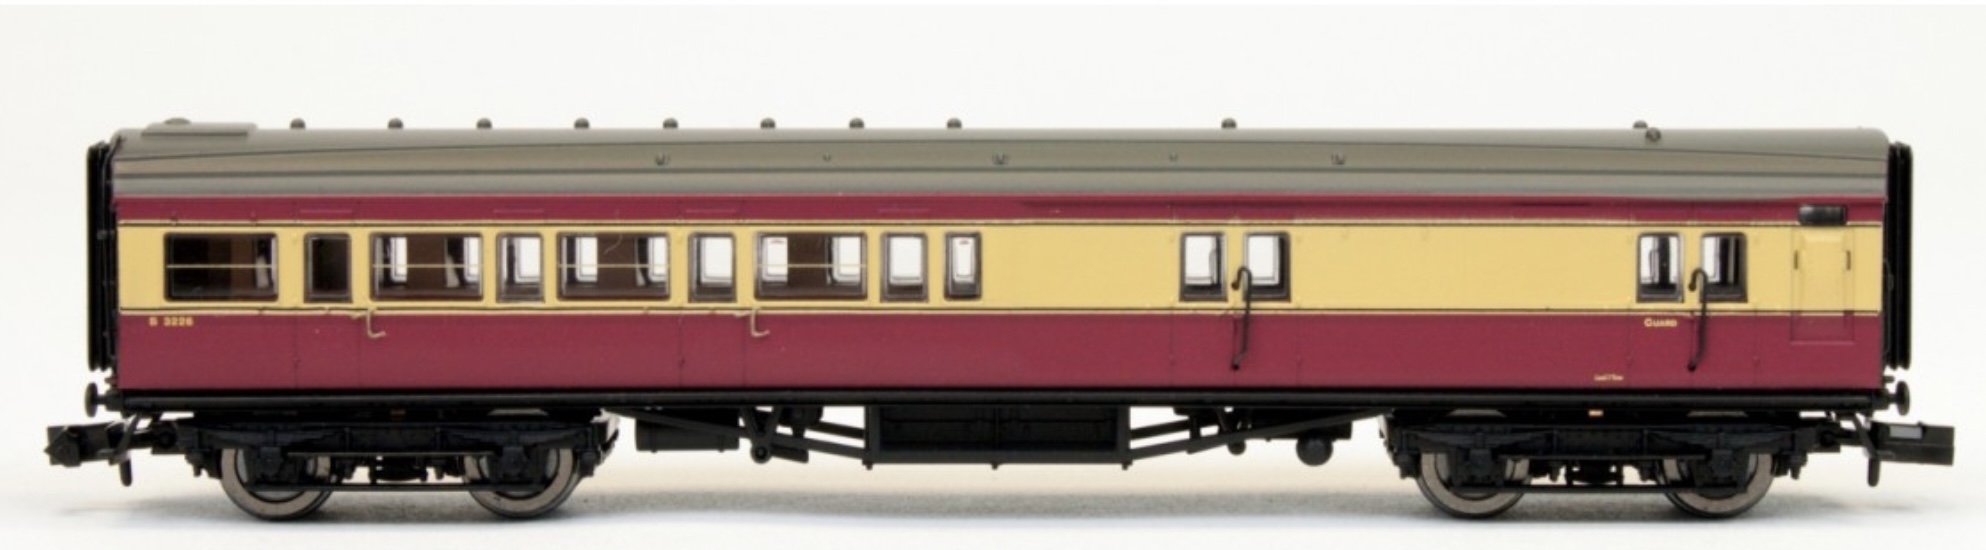 N Scale - Dapol - 2P-012-653 - Passenger Car, Brake Van, Maunsell, 3rd Class - British Rail - 3226